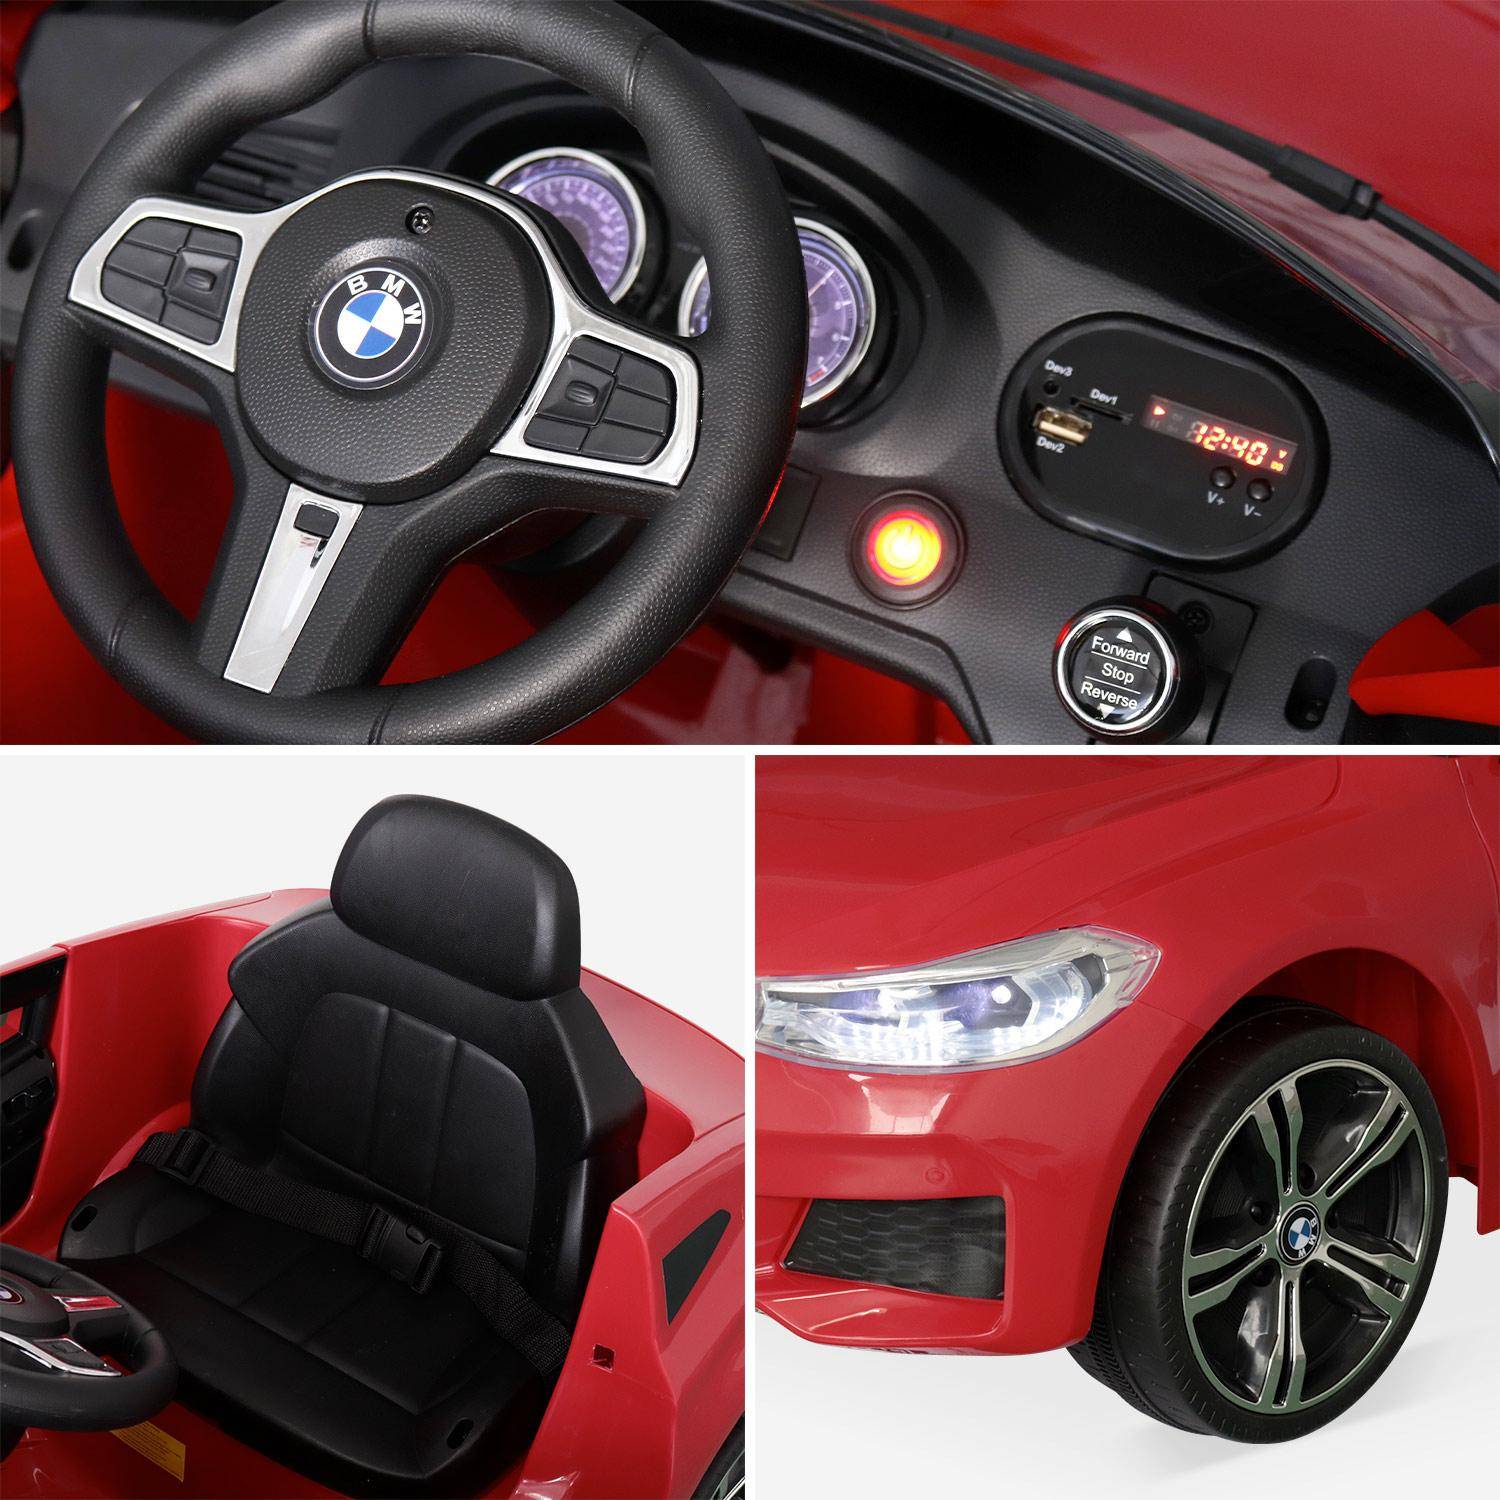 Auto Elettrica Per Bambini BMW Crazy 6V ROSA | LGV Shopping